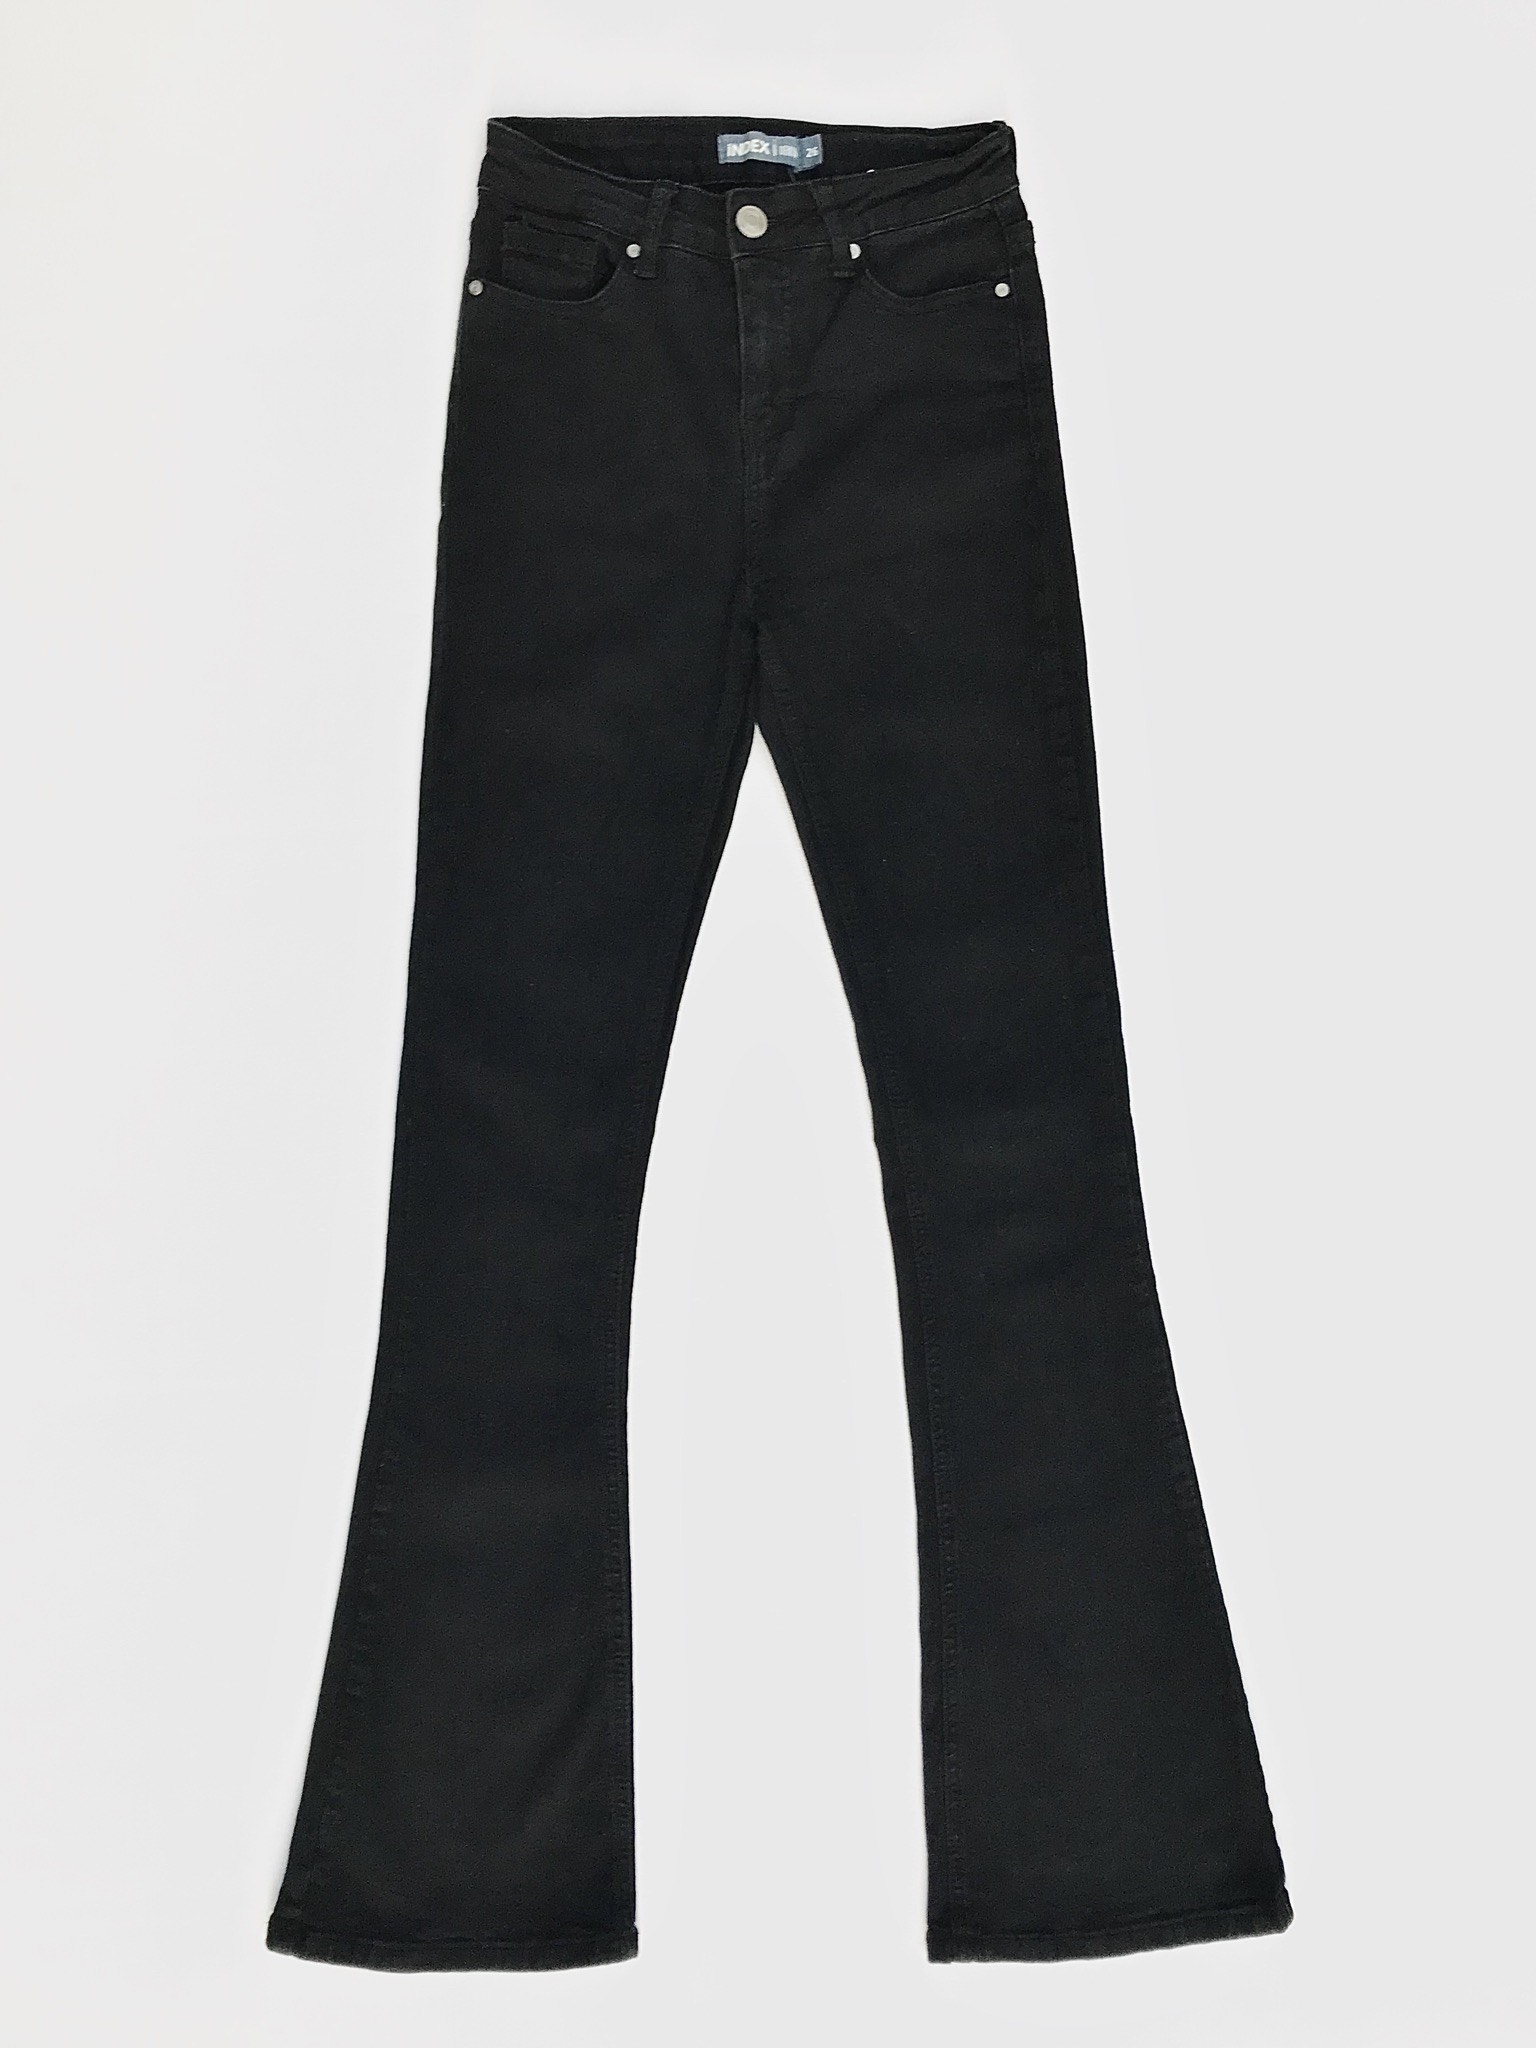 Pantalón Index a la cintura, de denim negro stretch 75% algodón, 5 bolsillos, pitillo con basta campana
Talla 26